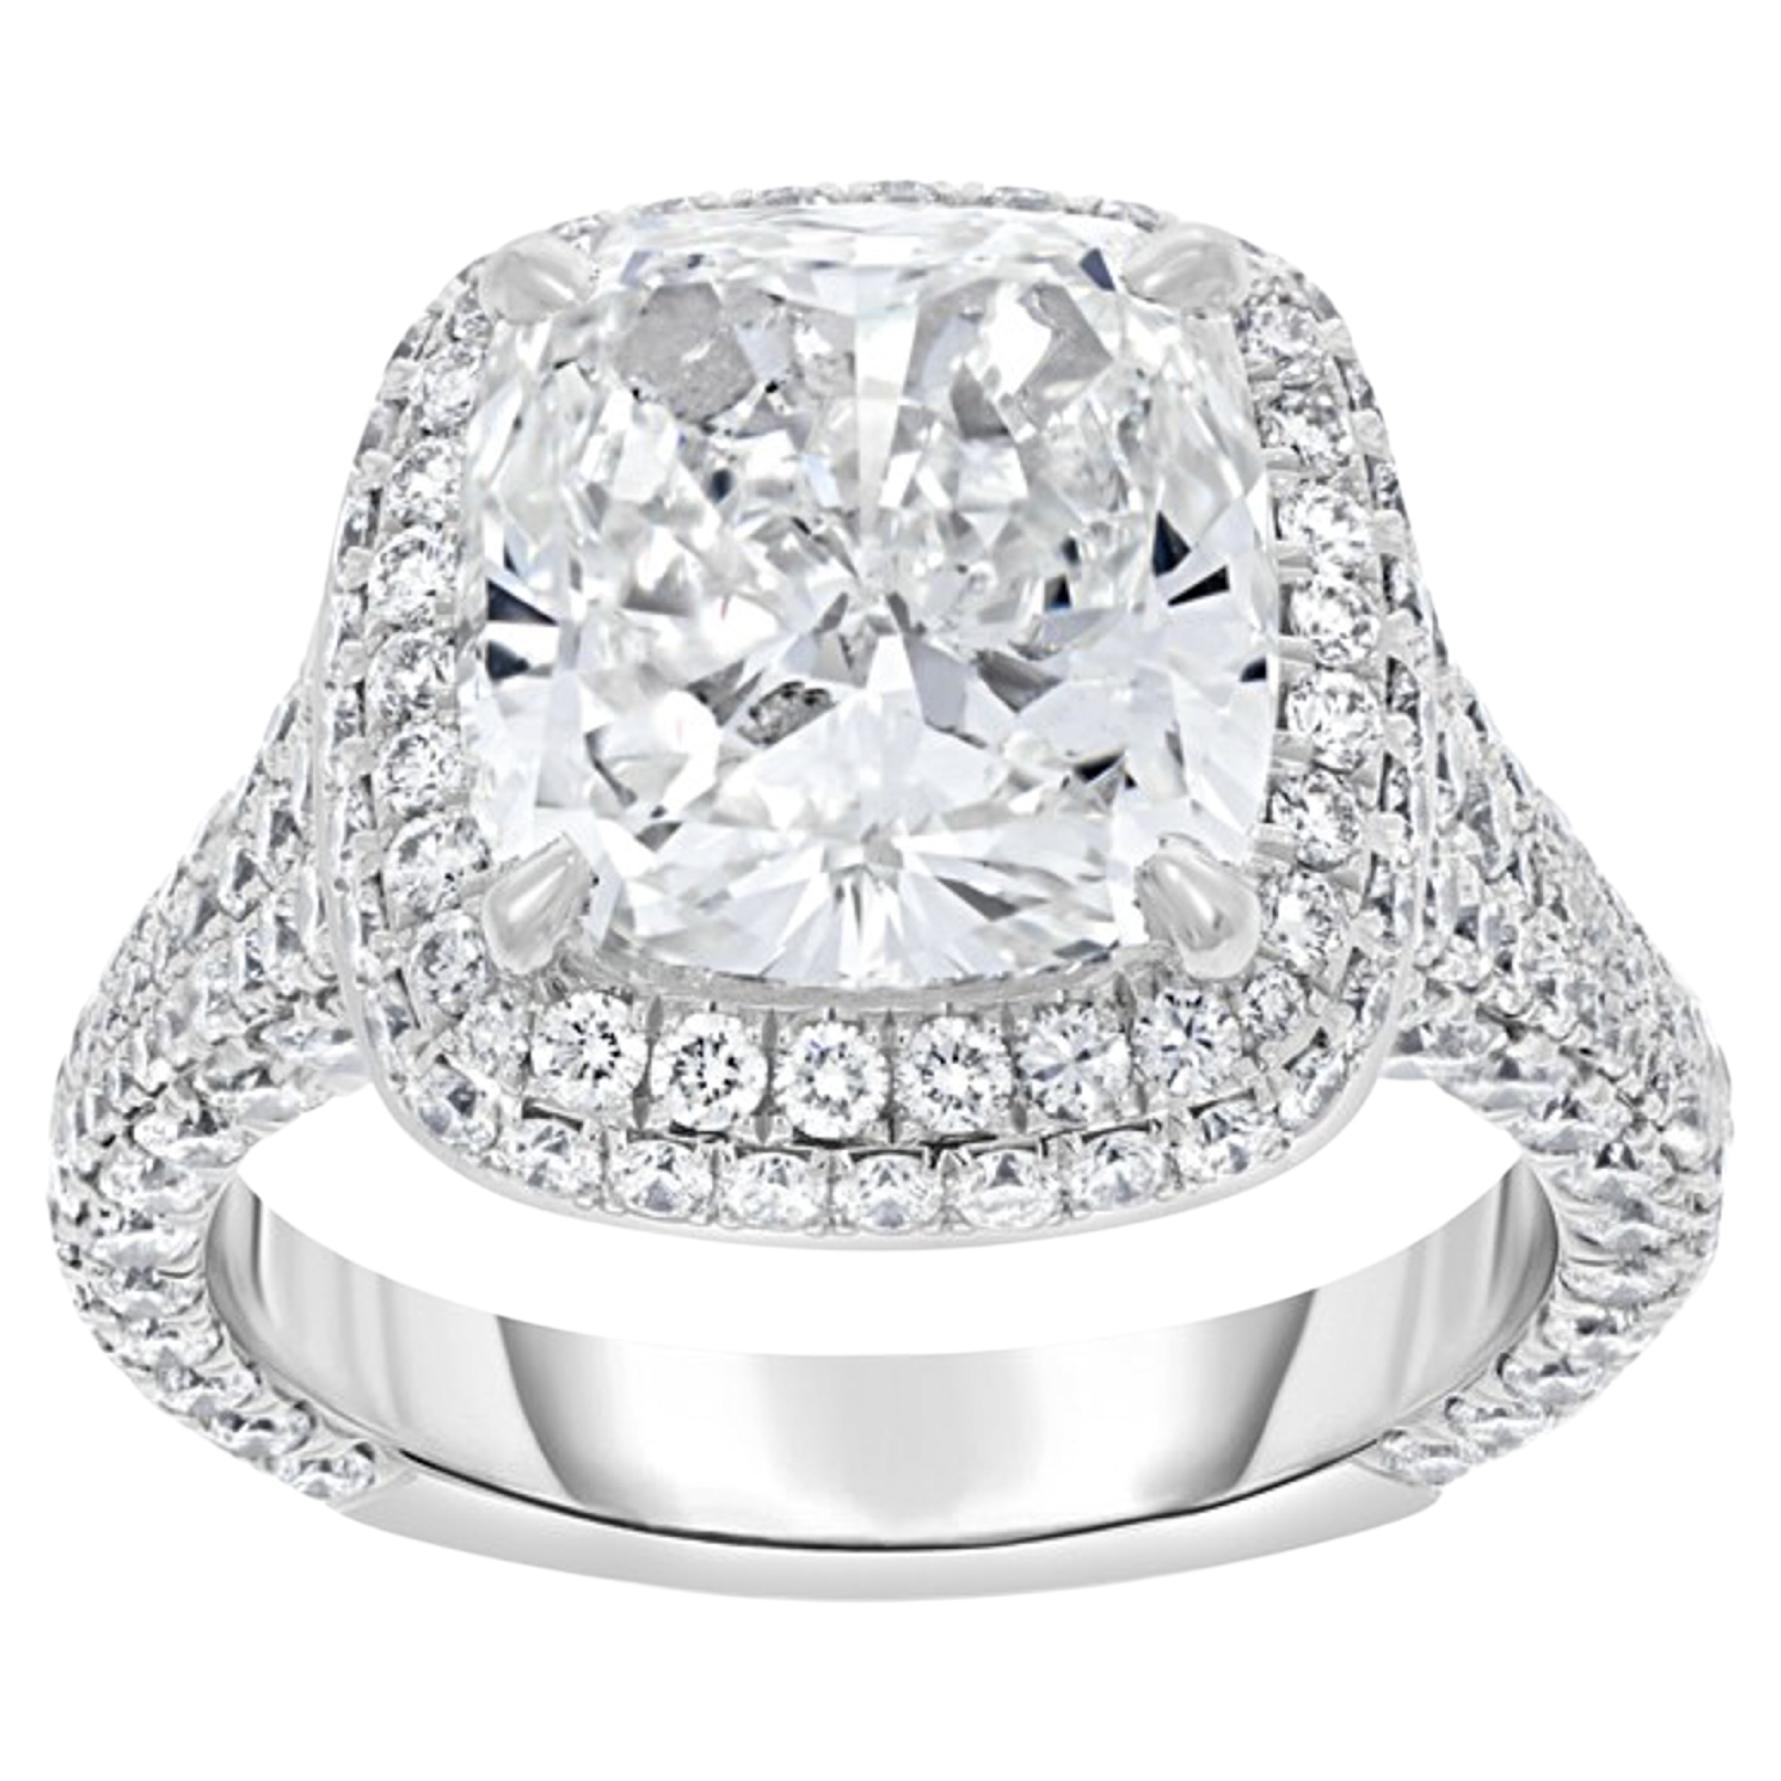 Platinum Cushion Shaped Diamond Engagement Ring